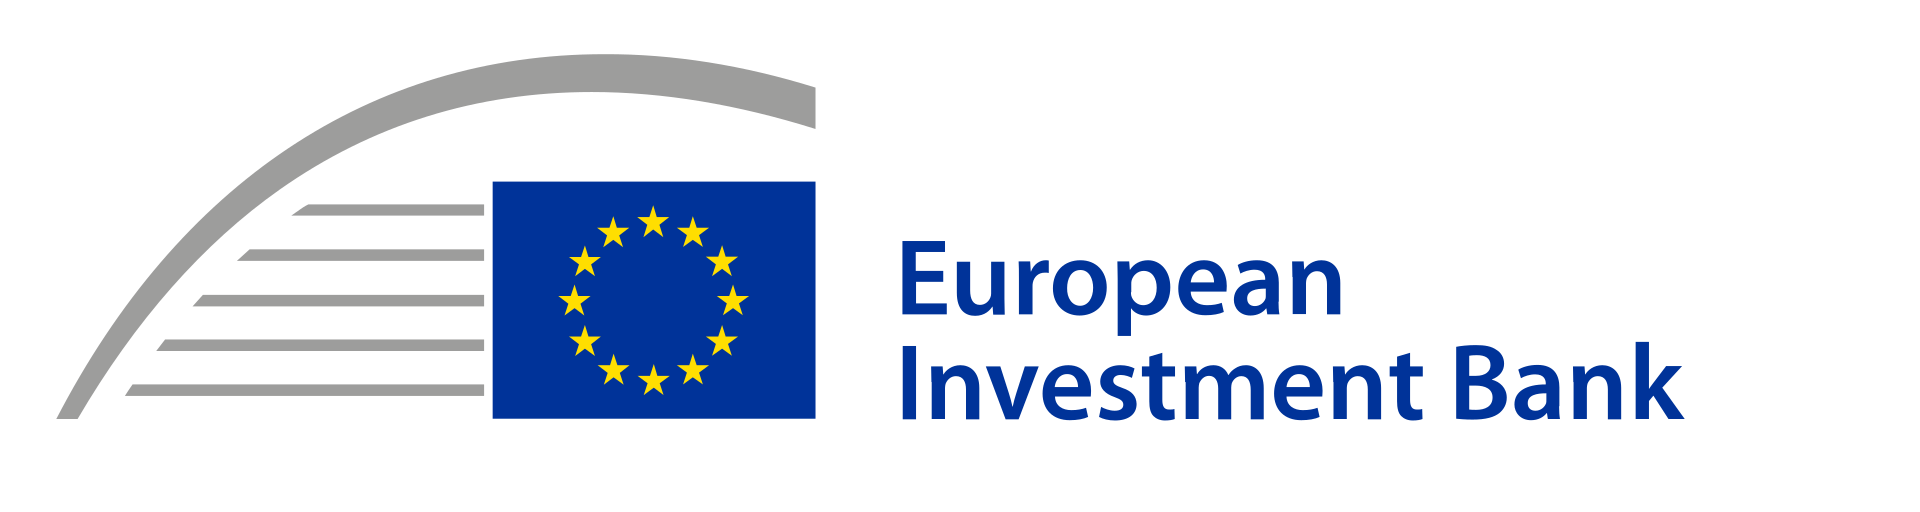 Европейские инвестиционные банки. Европейский инвестиционный банк. European investment Bank лого. Кокошник с узорами рисунок 2 класс. Логотип EIB.